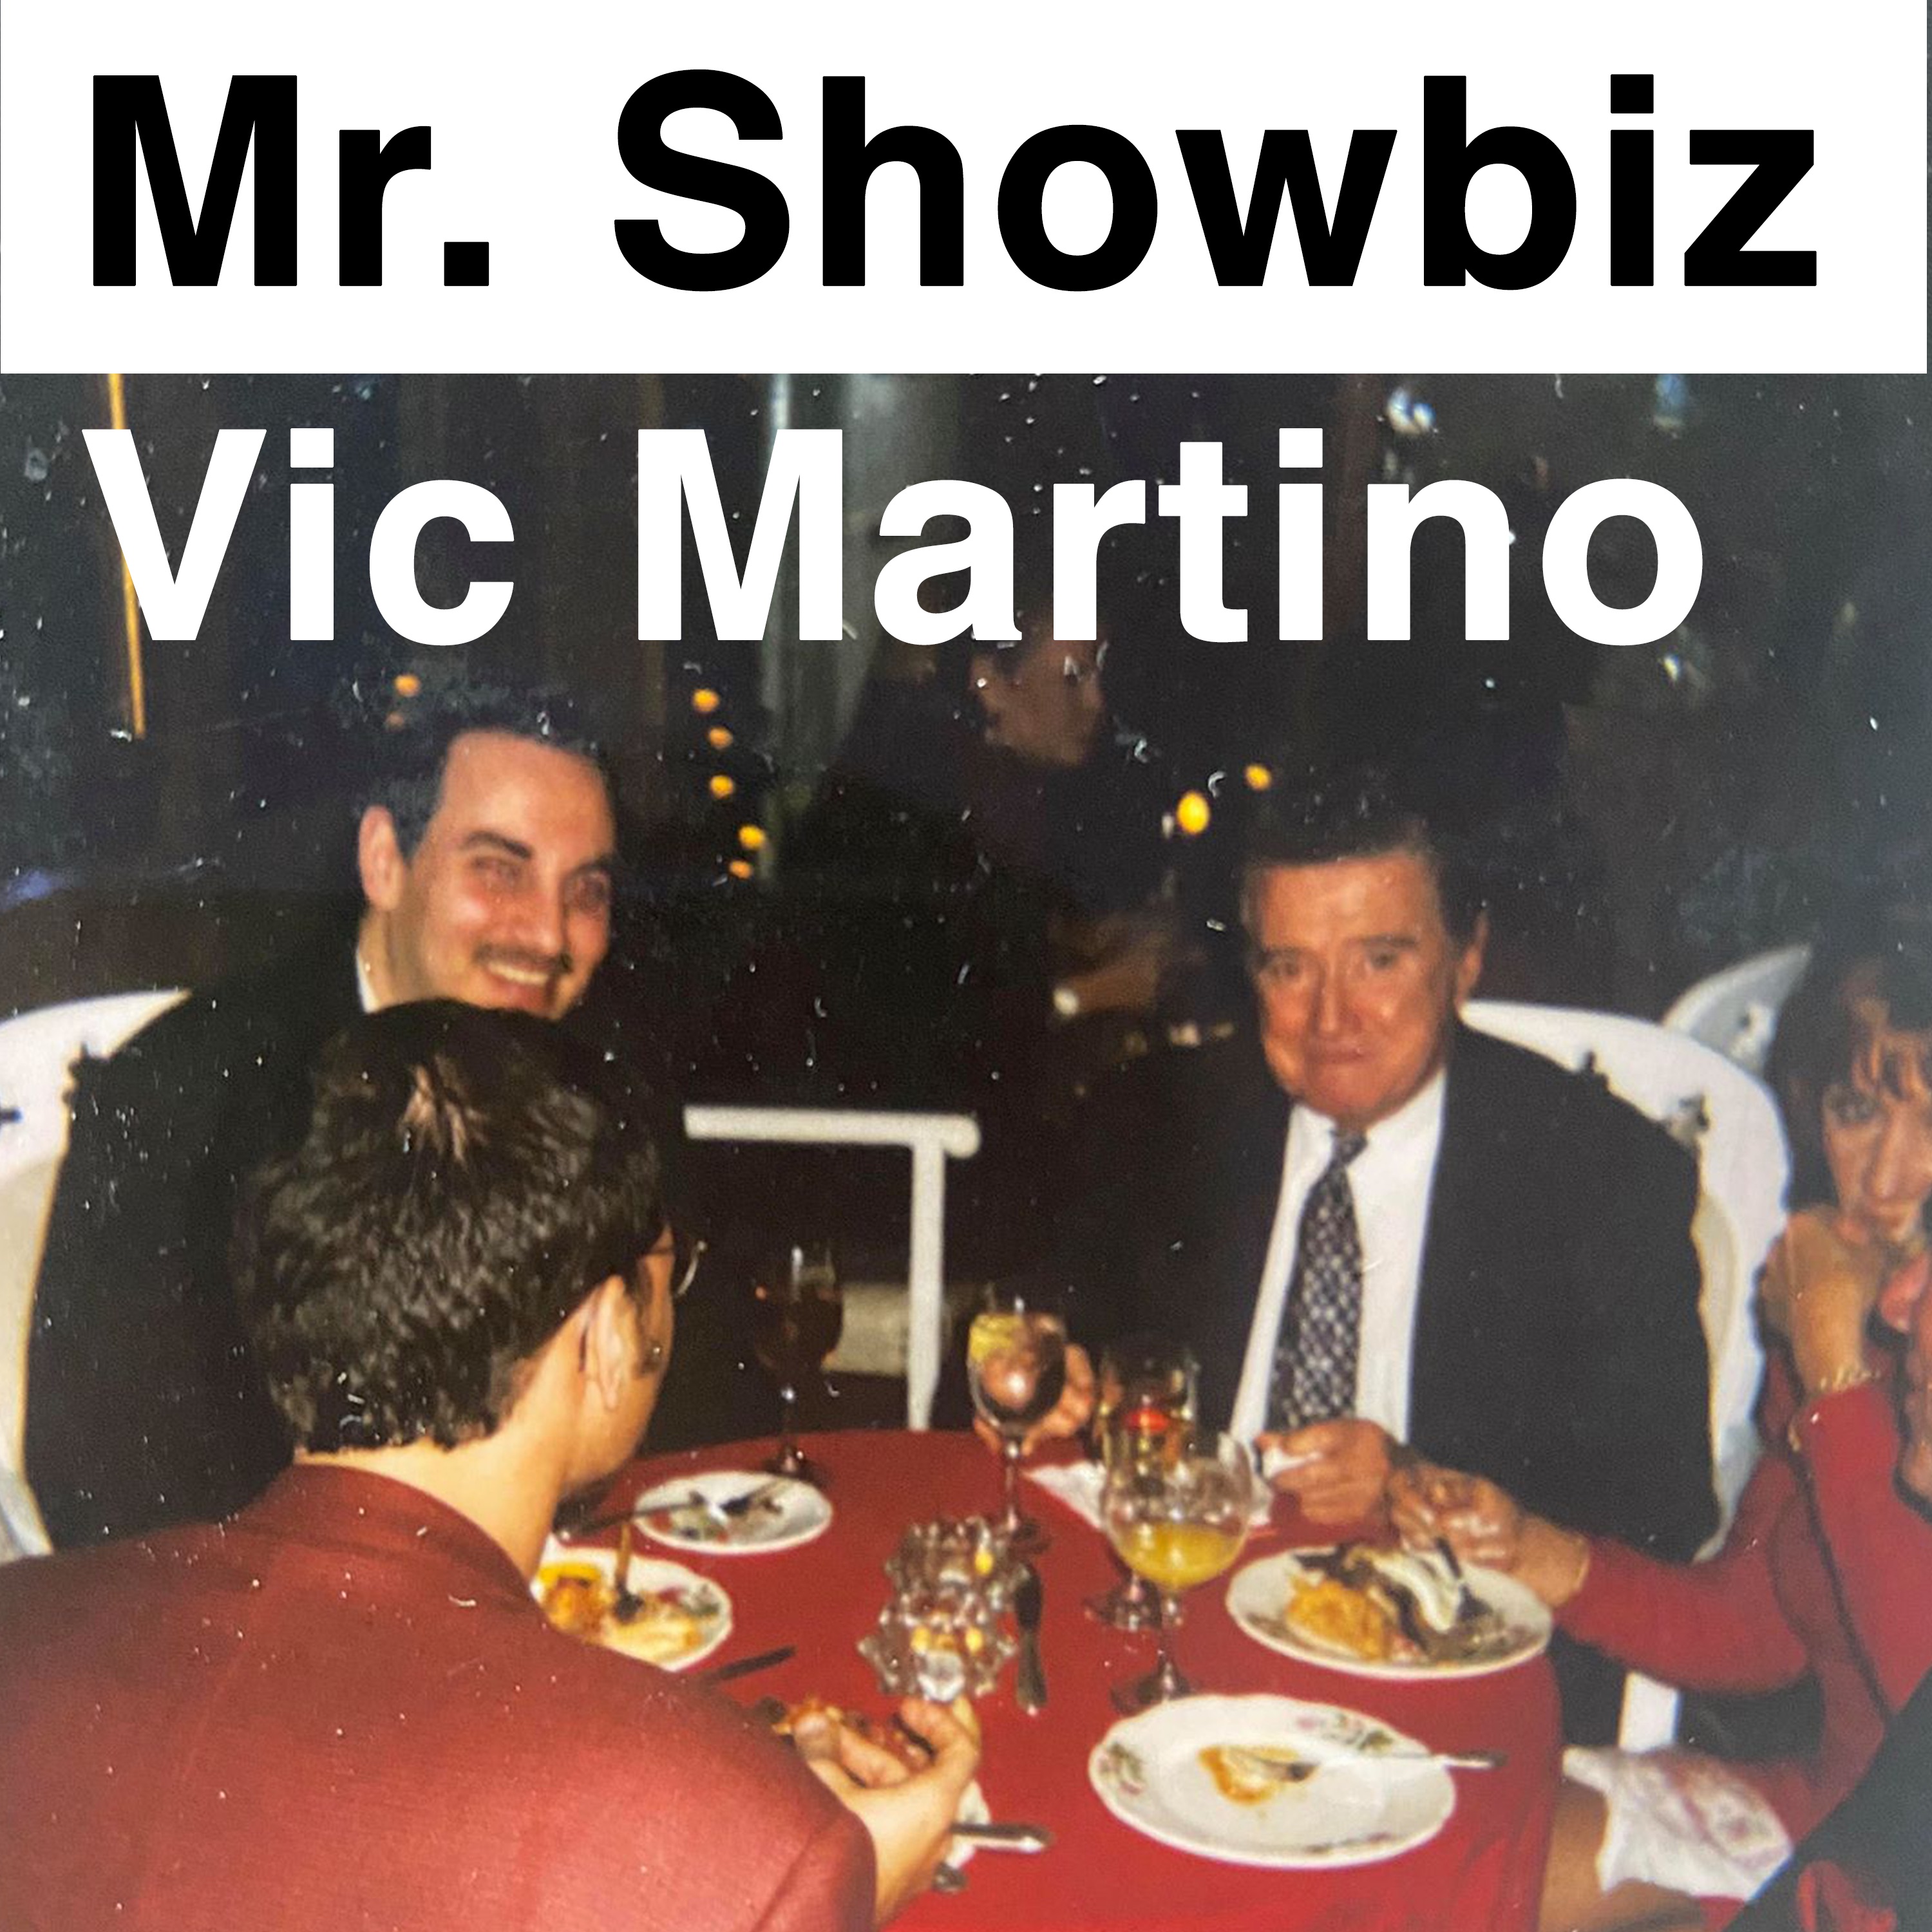 The Mr. ShowBiz Podcast with Vic Martino - Pilot Episode